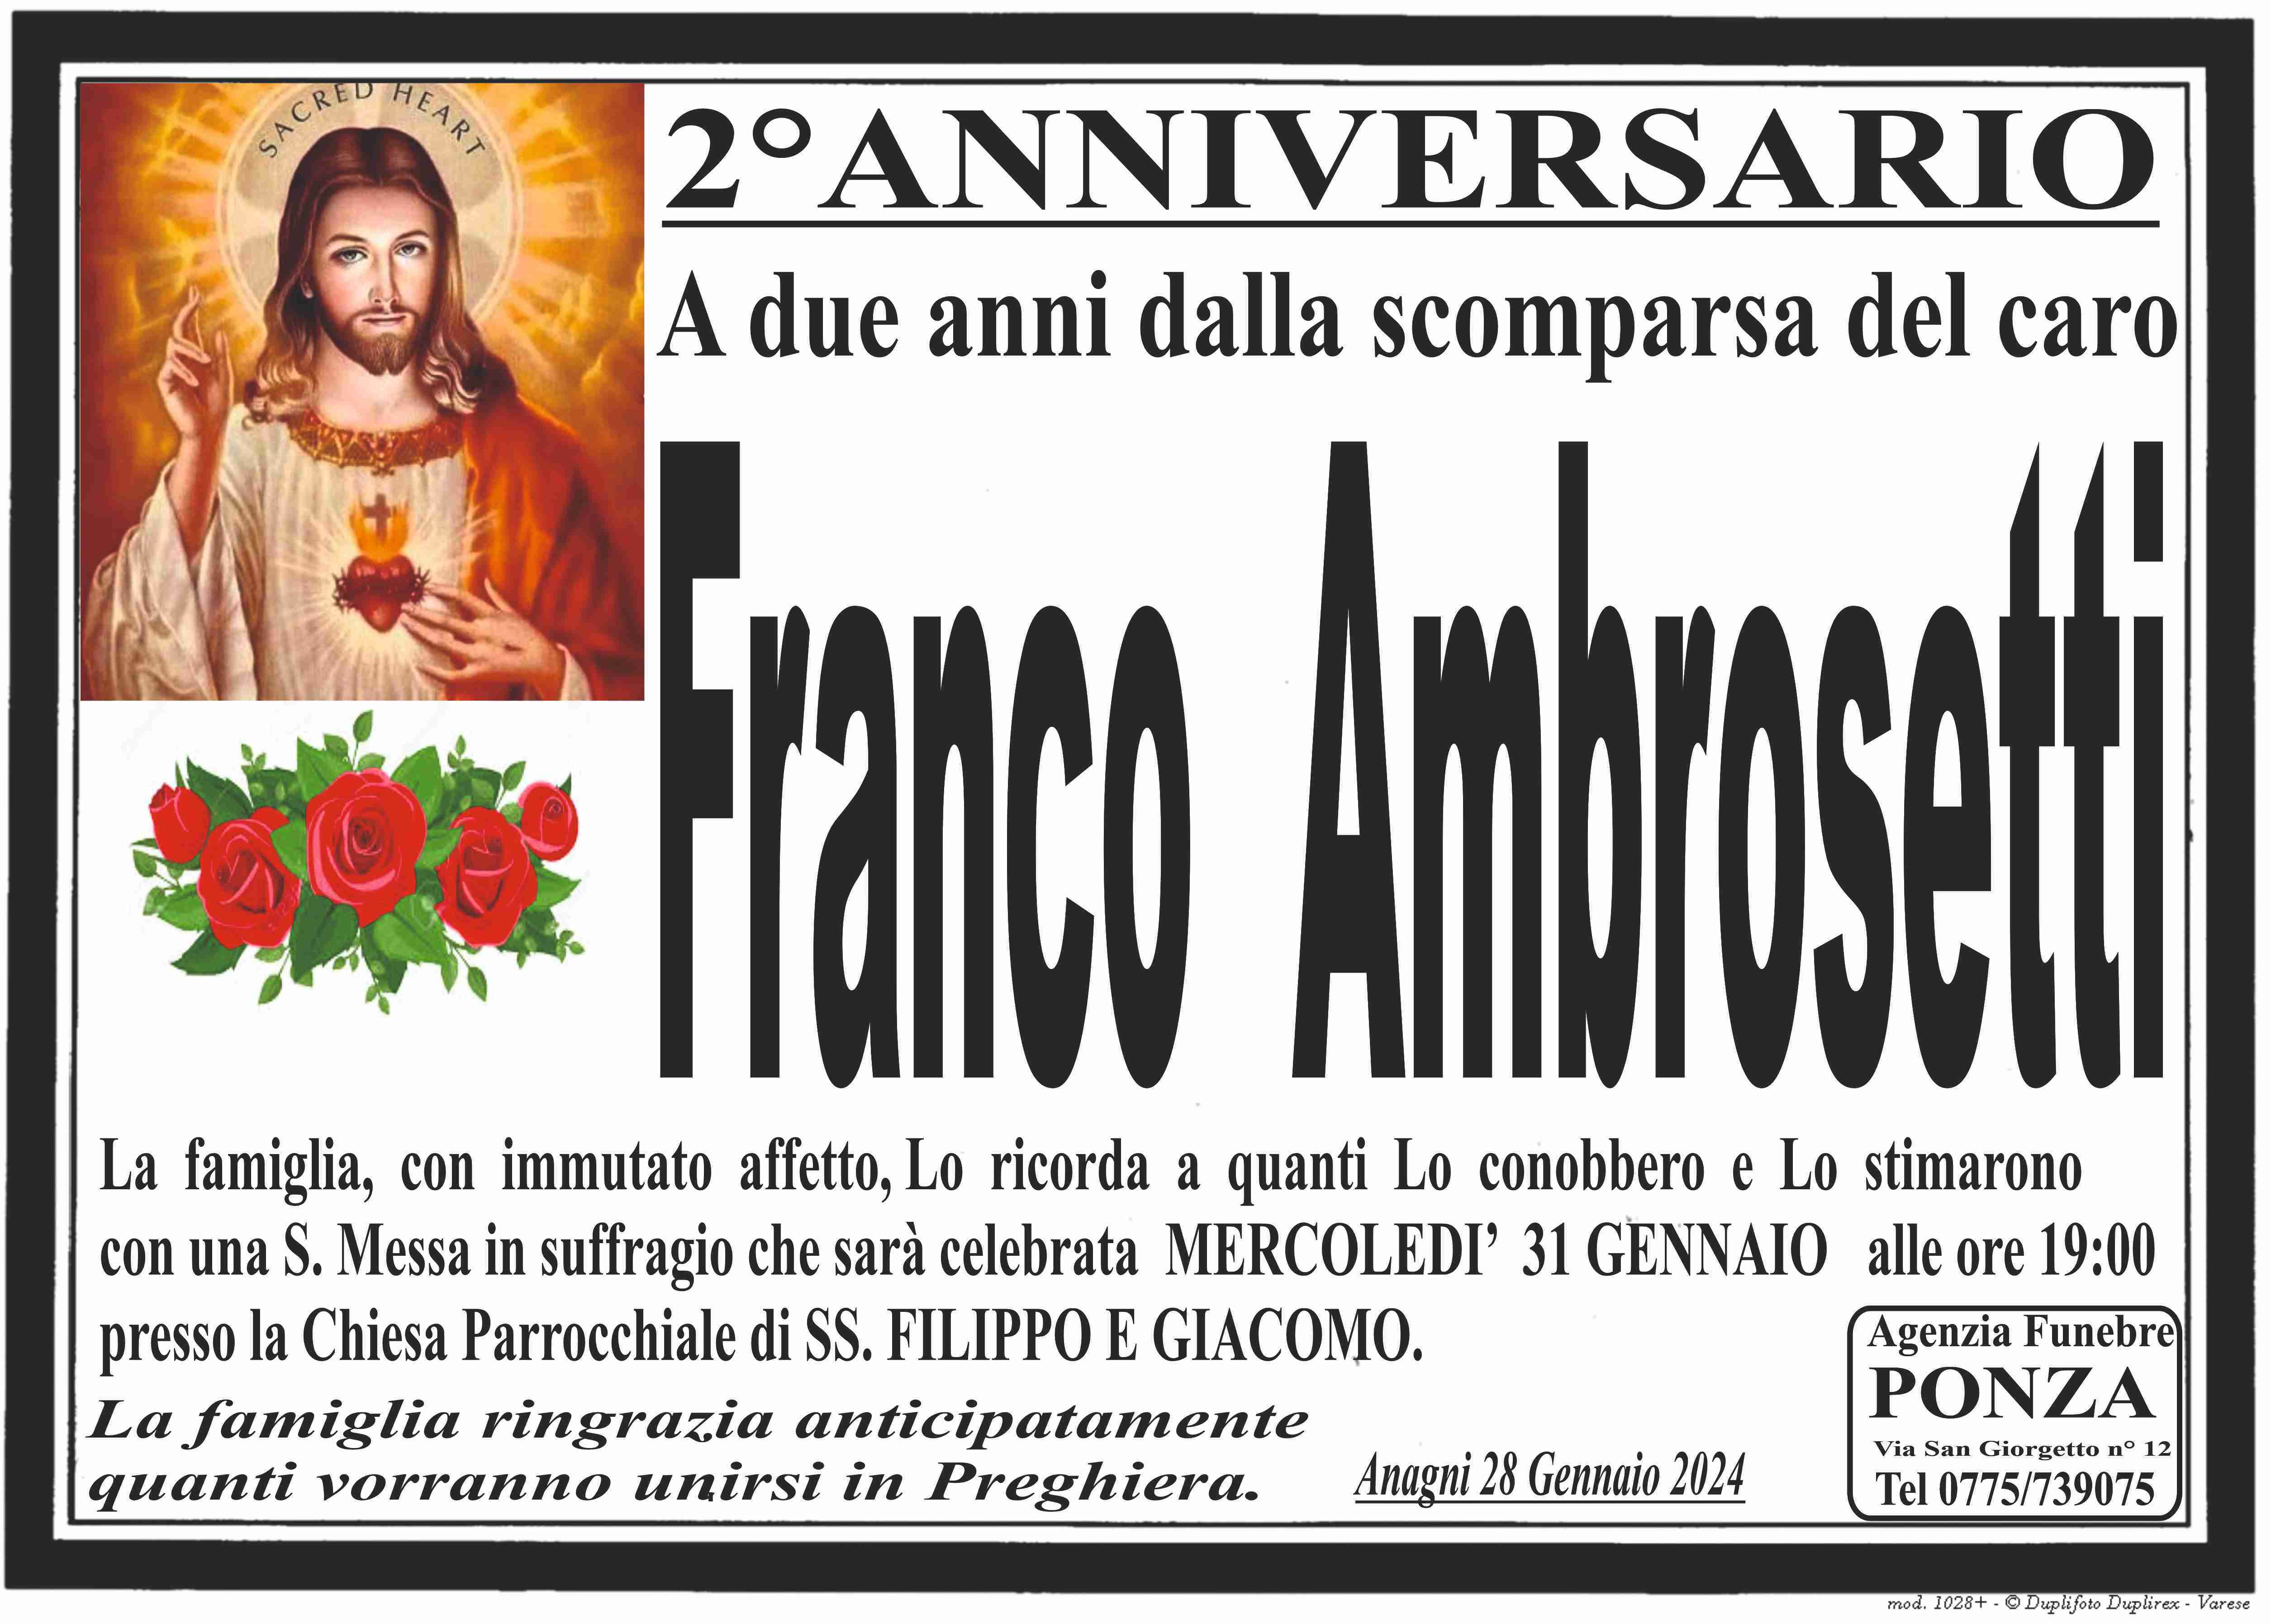 Franco Ambrosetti